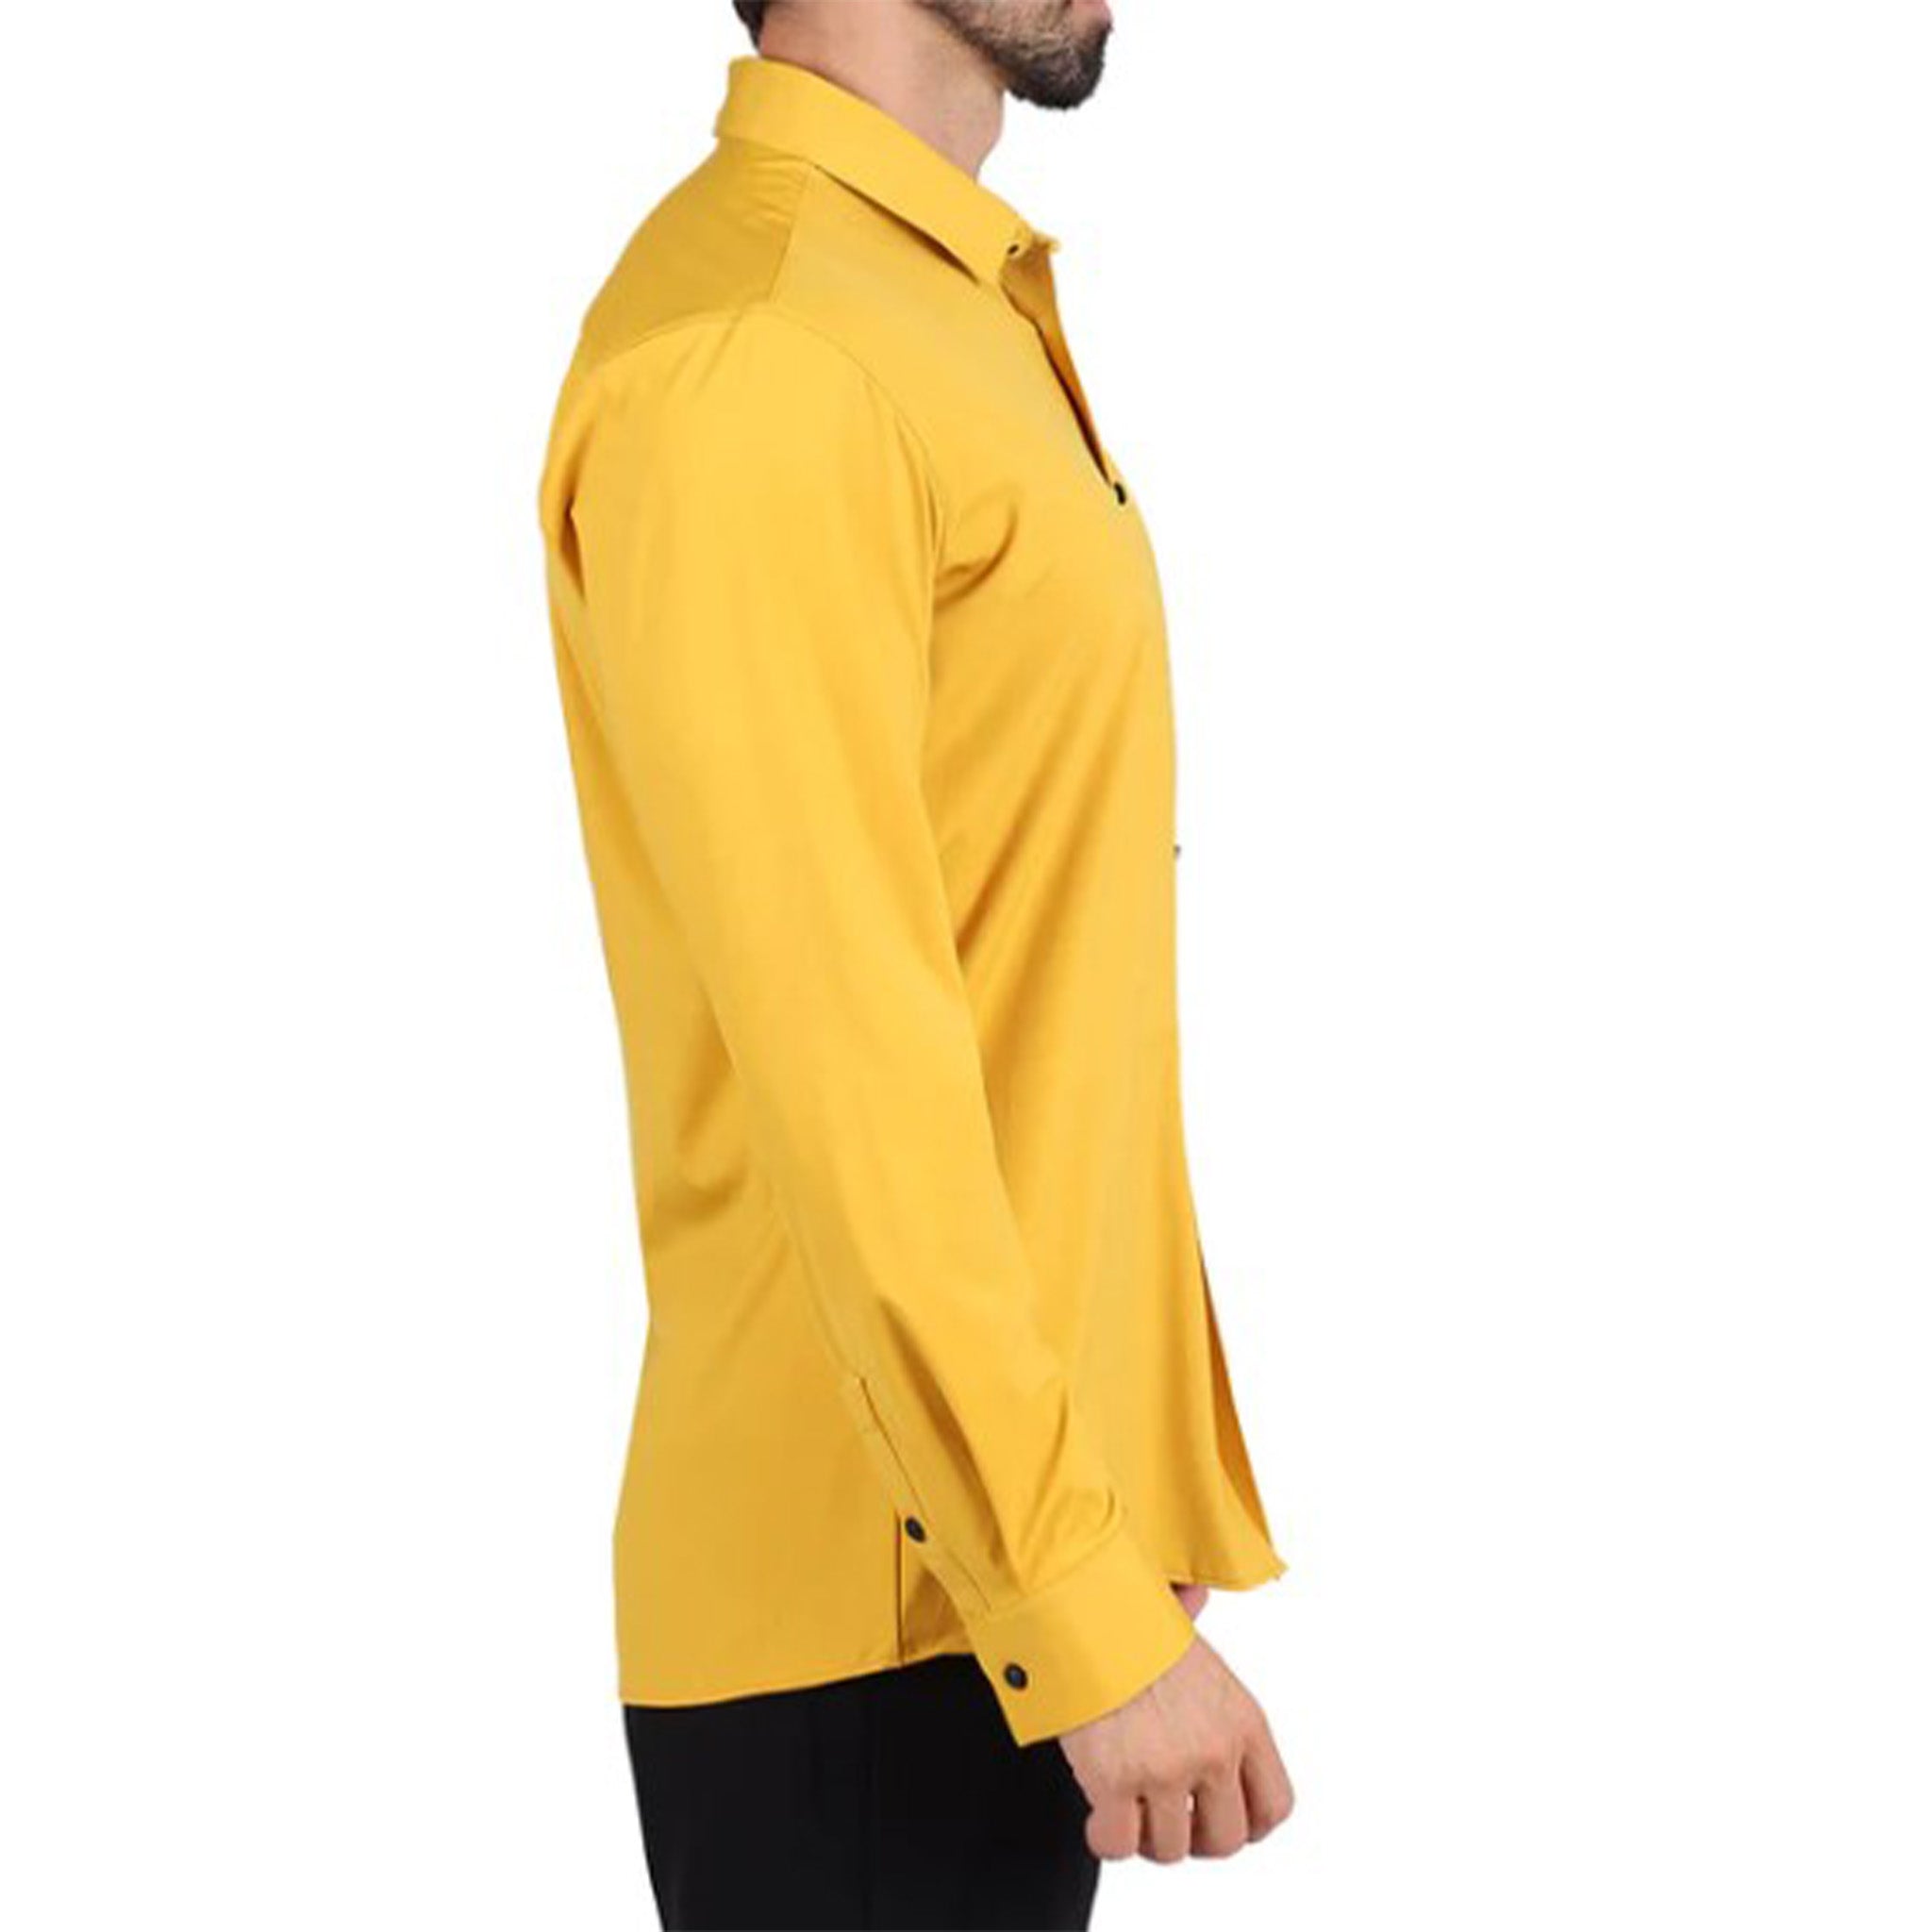 Mustard Slim Stretch Fashion Shirt